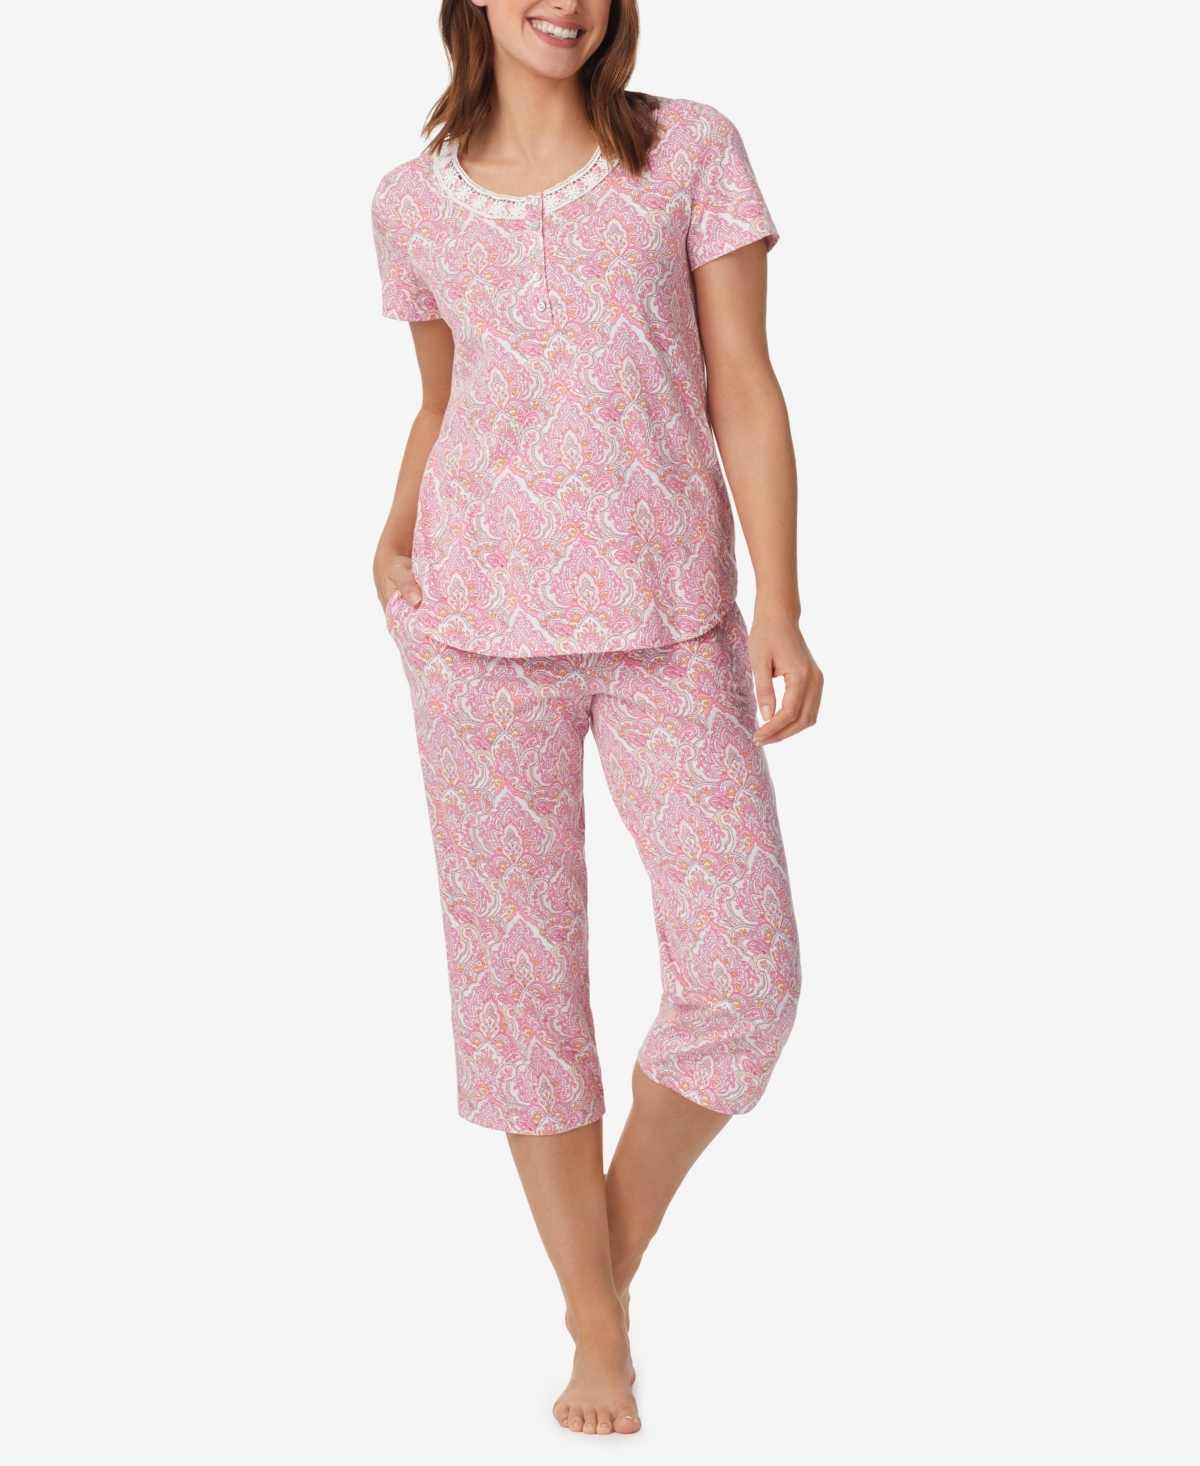 Women's Short Sleeve Top and Capri Pants 2 Piece Pajama Set - Pink, White Multi